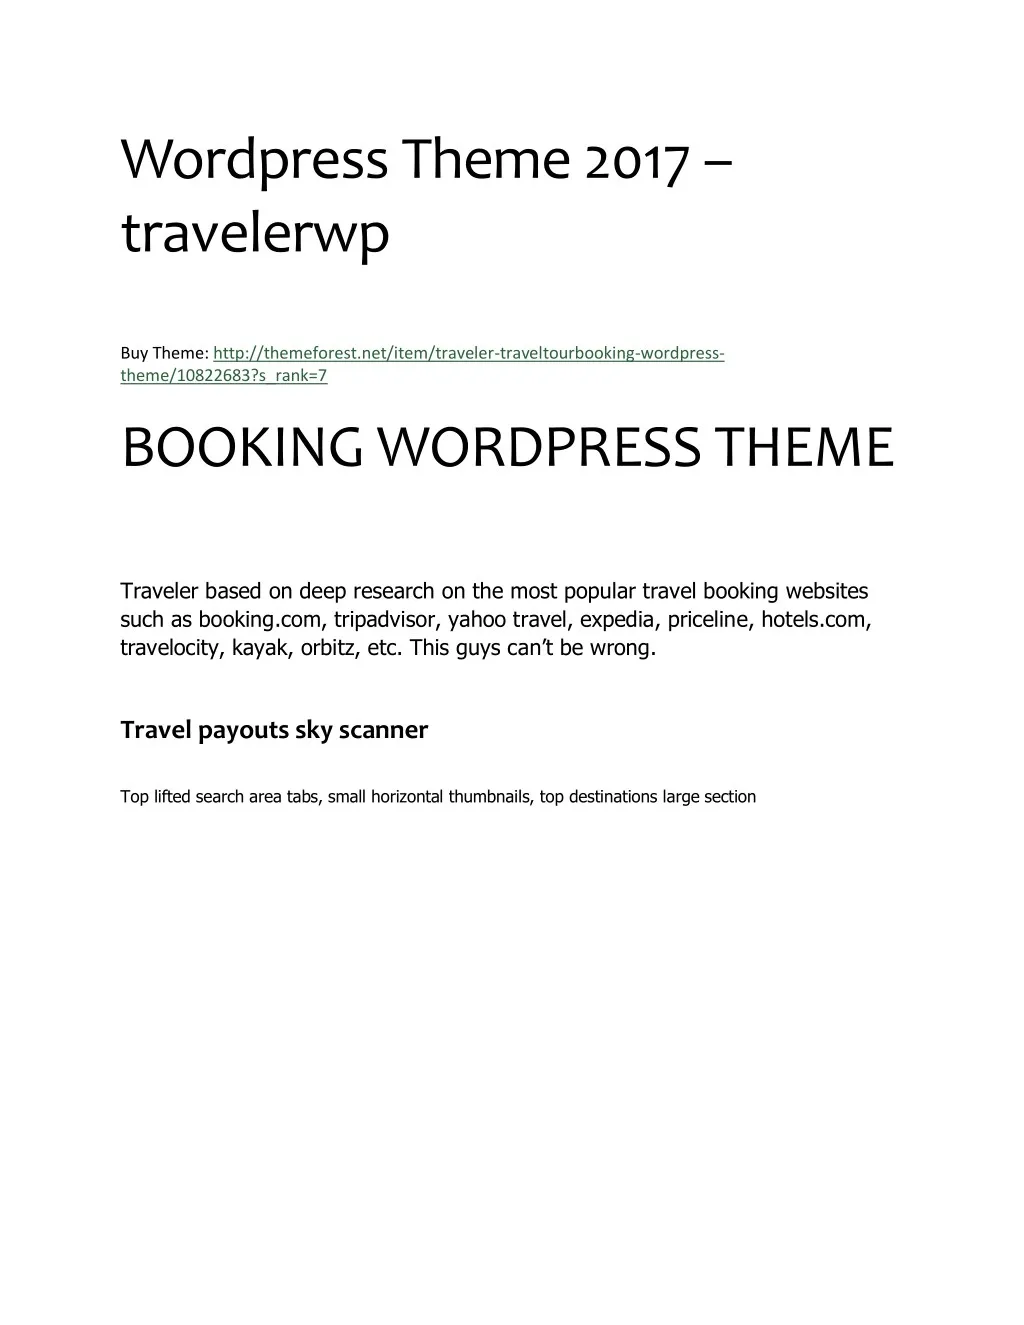 wordpress theme 2017 travelerwp buy theme http